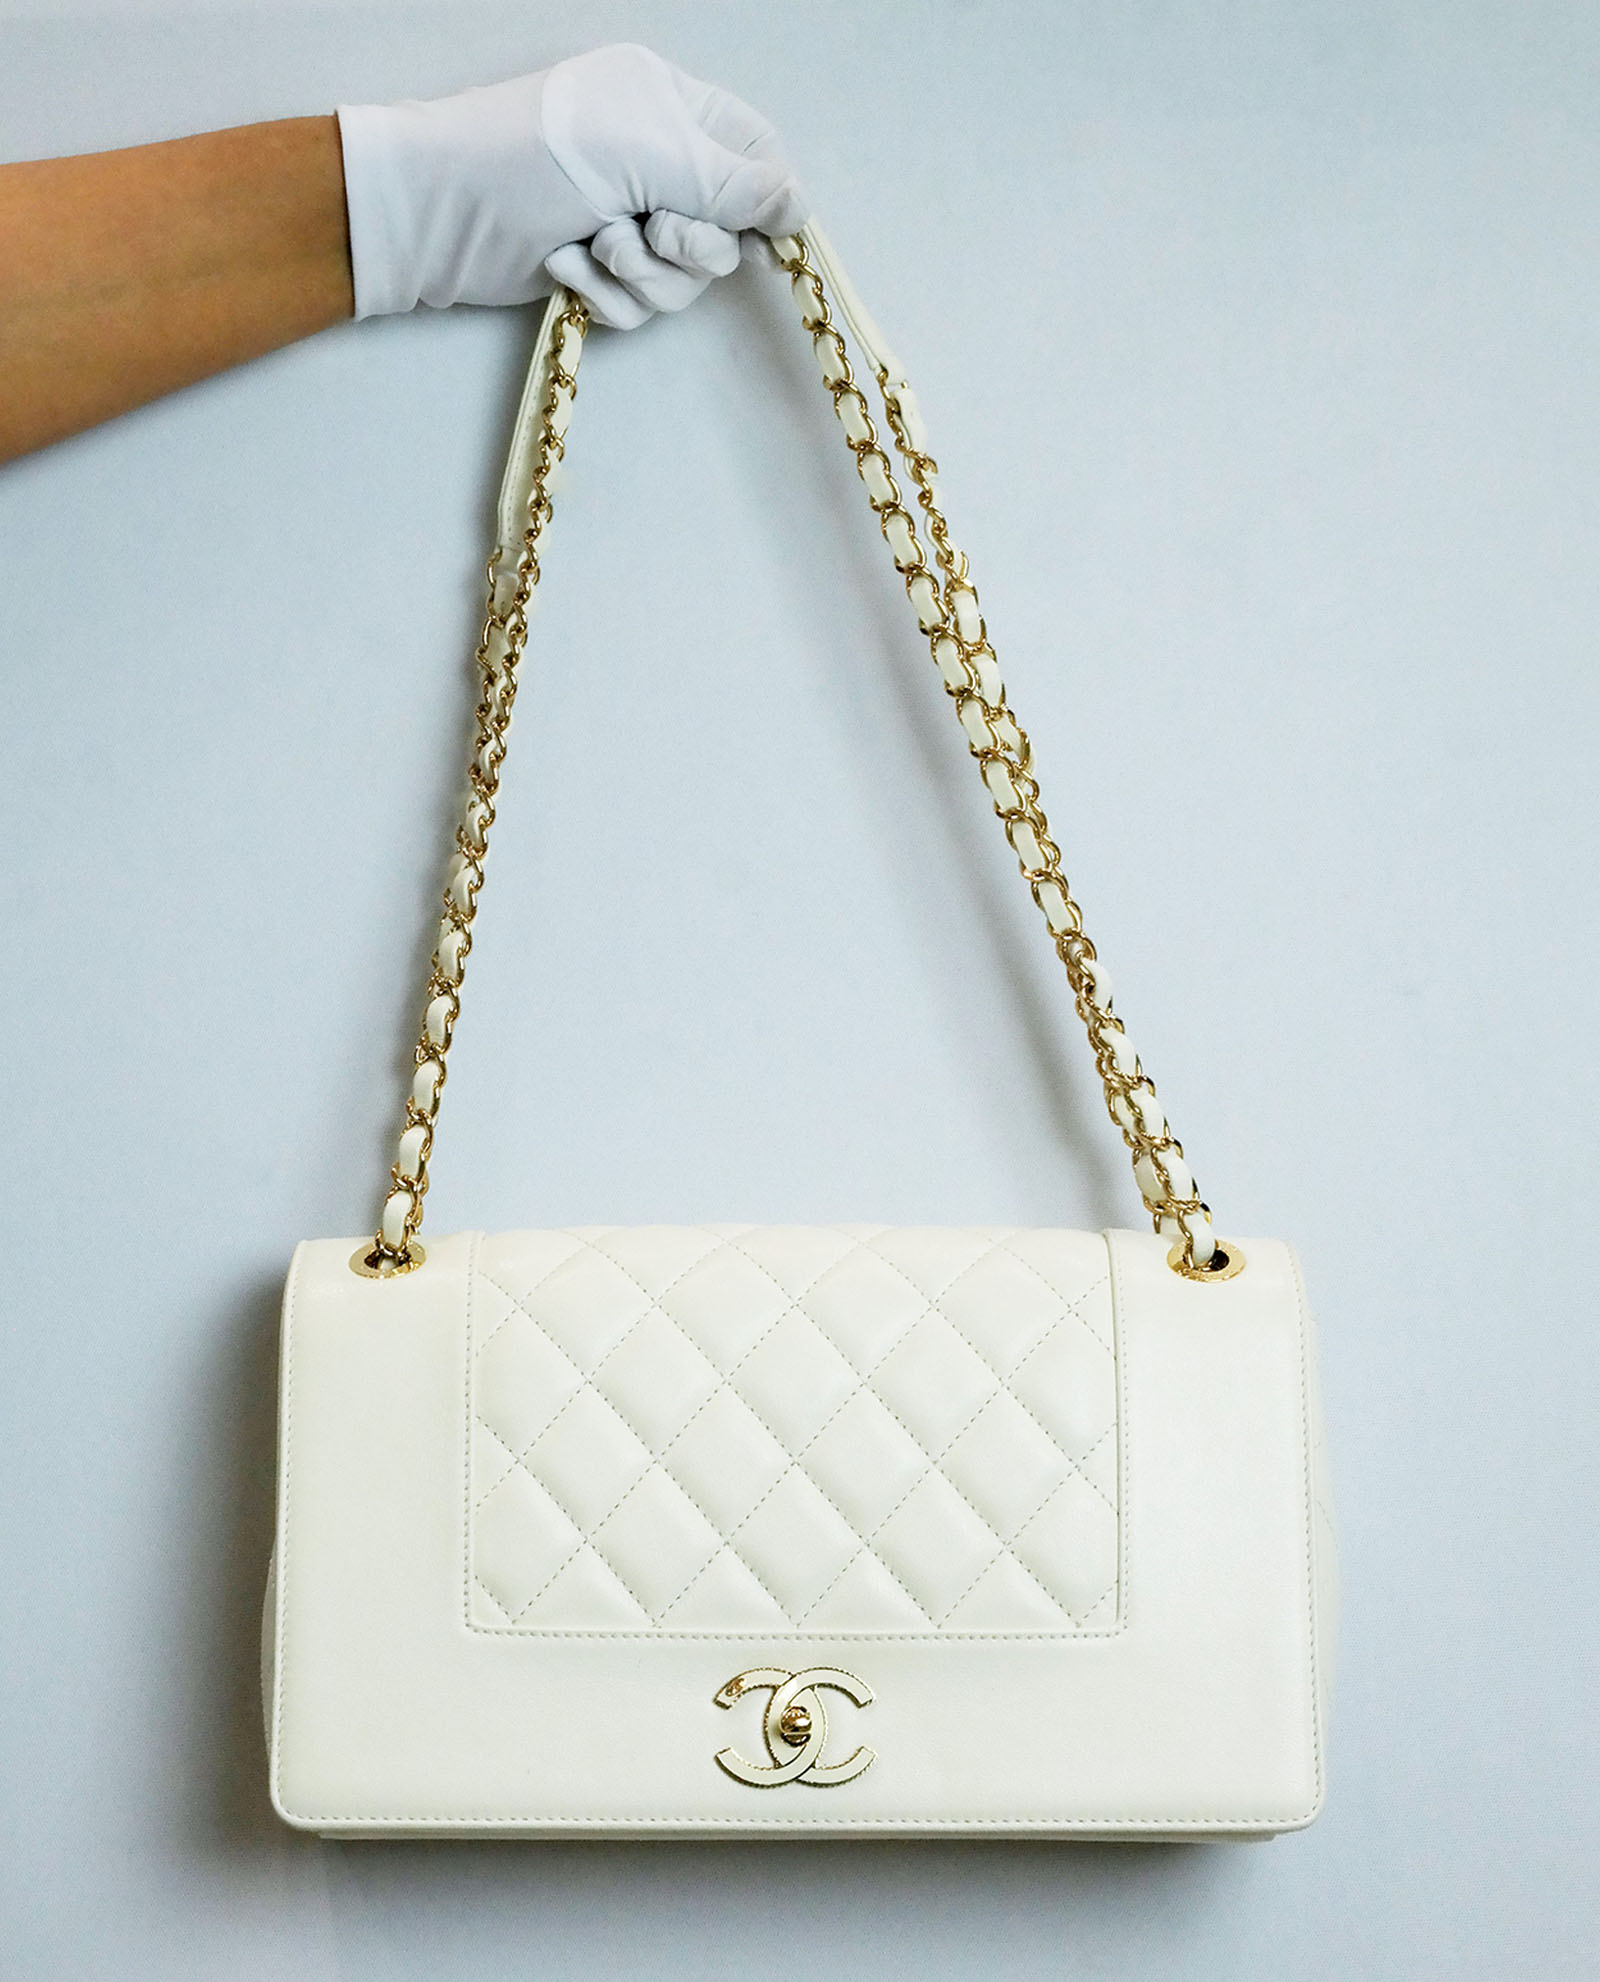 Chanel Limited Edition Union Jack Mademoiselle Flap Bag Auction